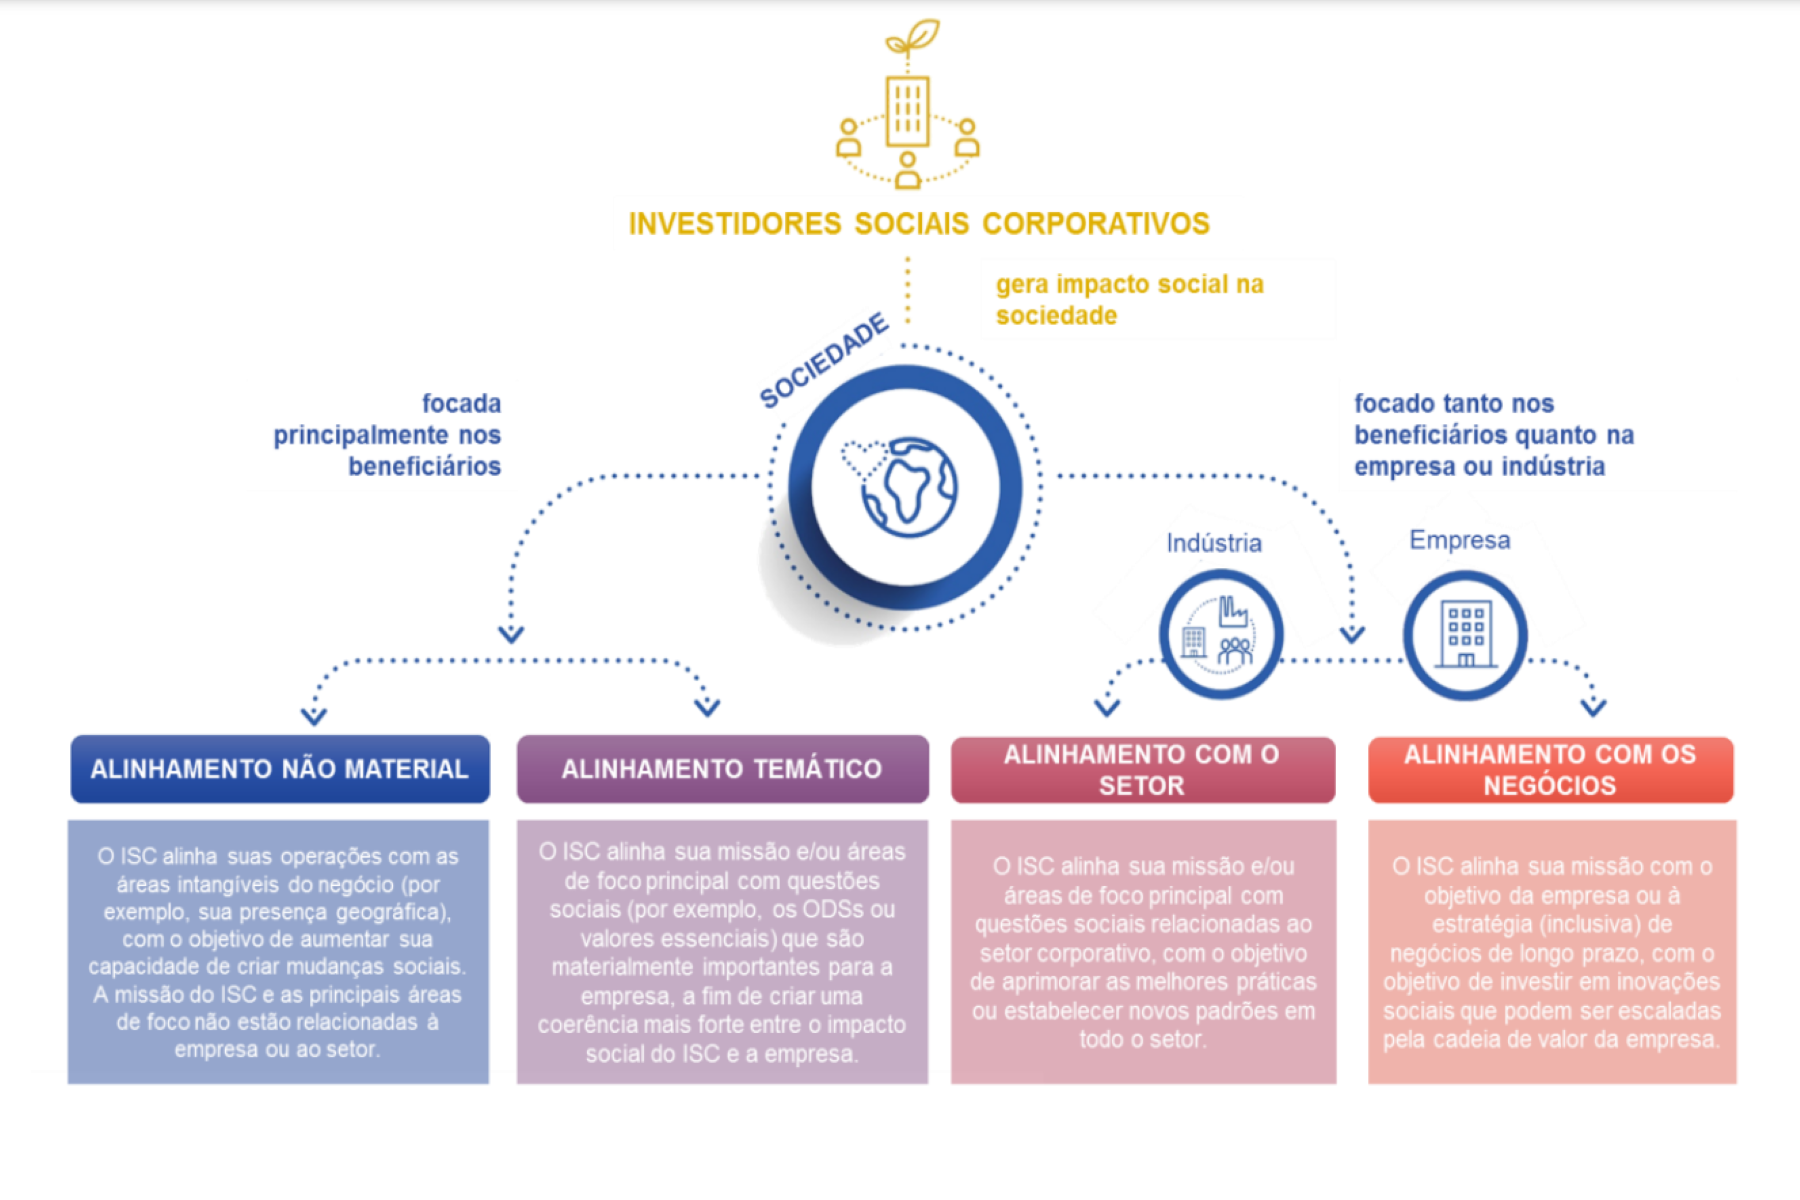 O crescimento do investidor social corporativo